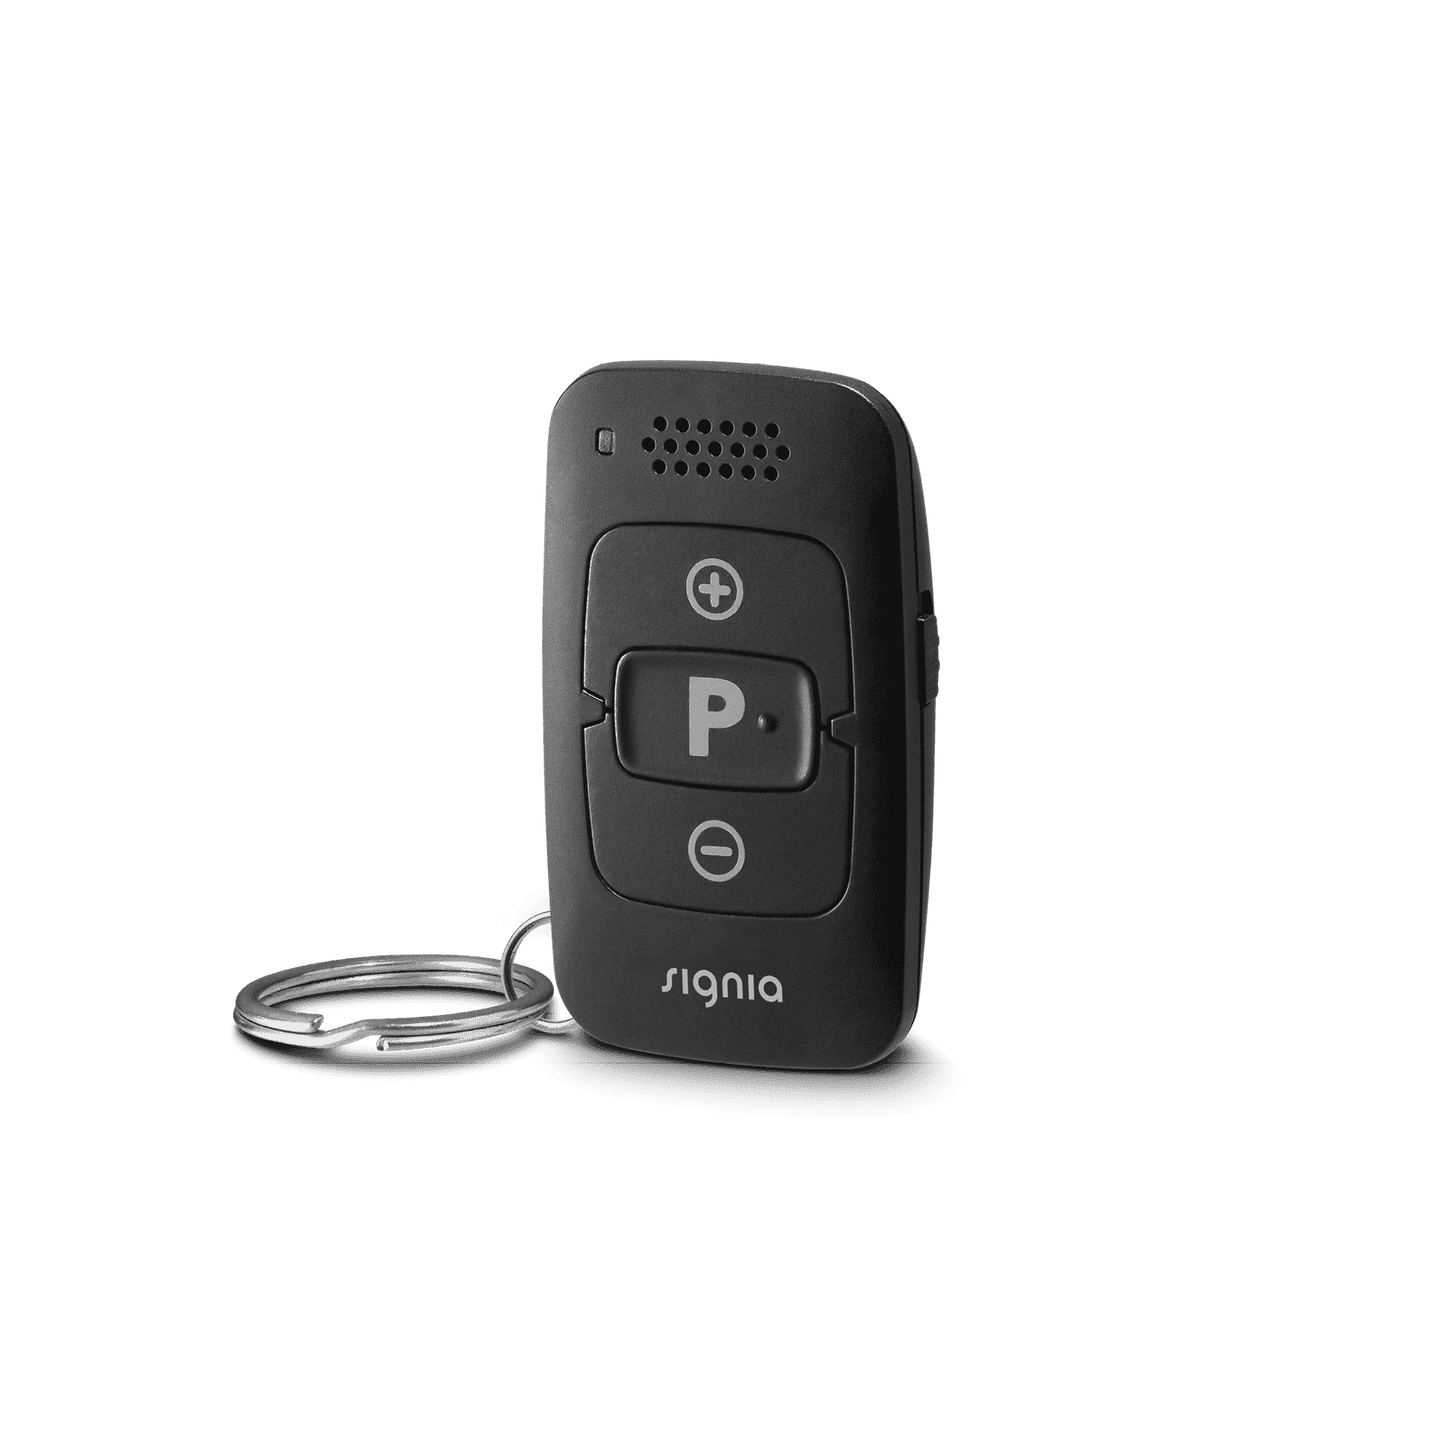 miniPocket - Fernbedienung für SIGNIA Hörgeräte